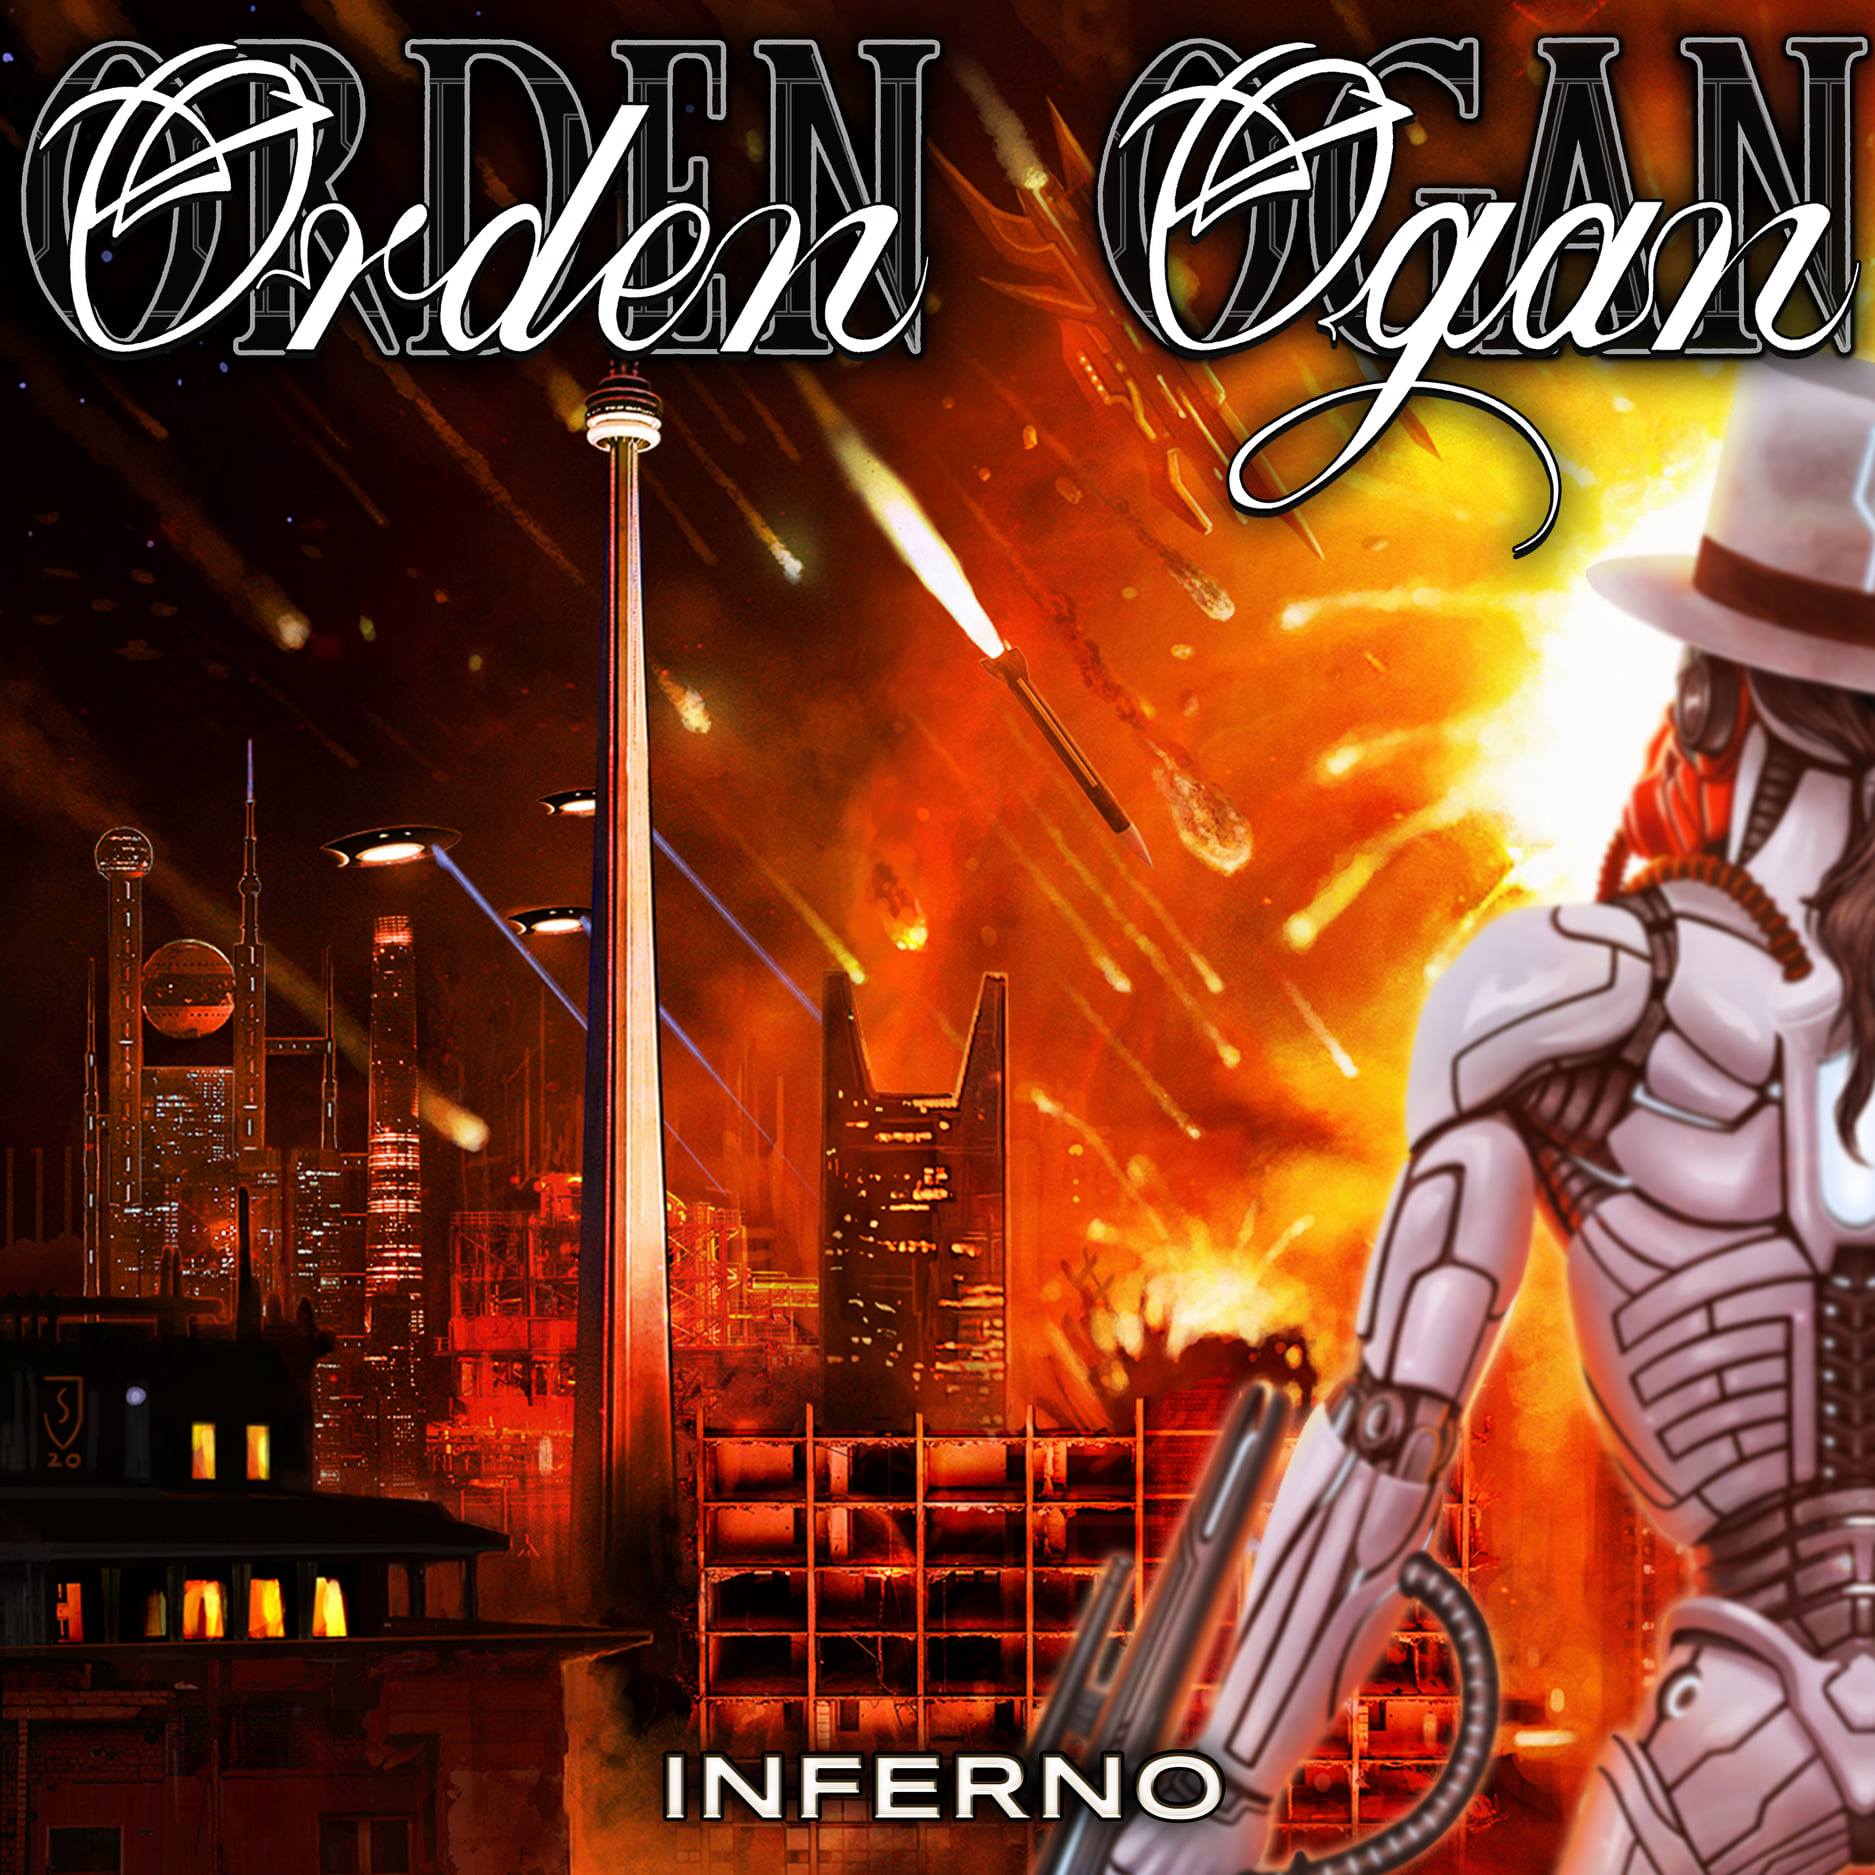 Orden Ogan - Inferno (single audio)